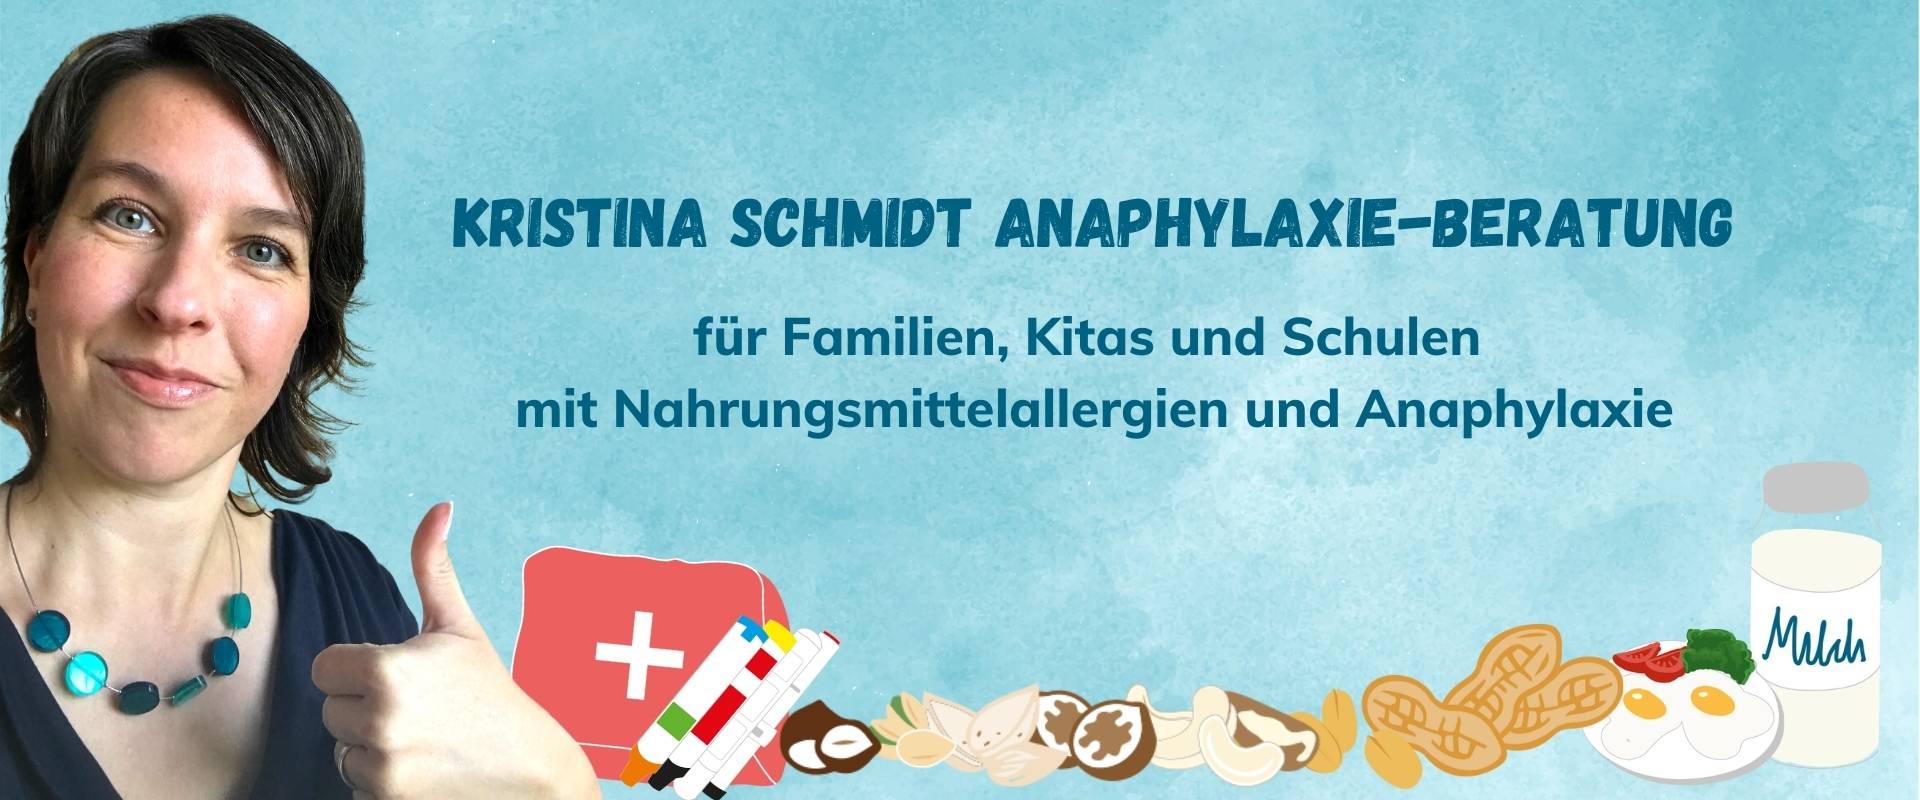 Kristina Schmidt, allergo-logisch Anaphylaxieberatung